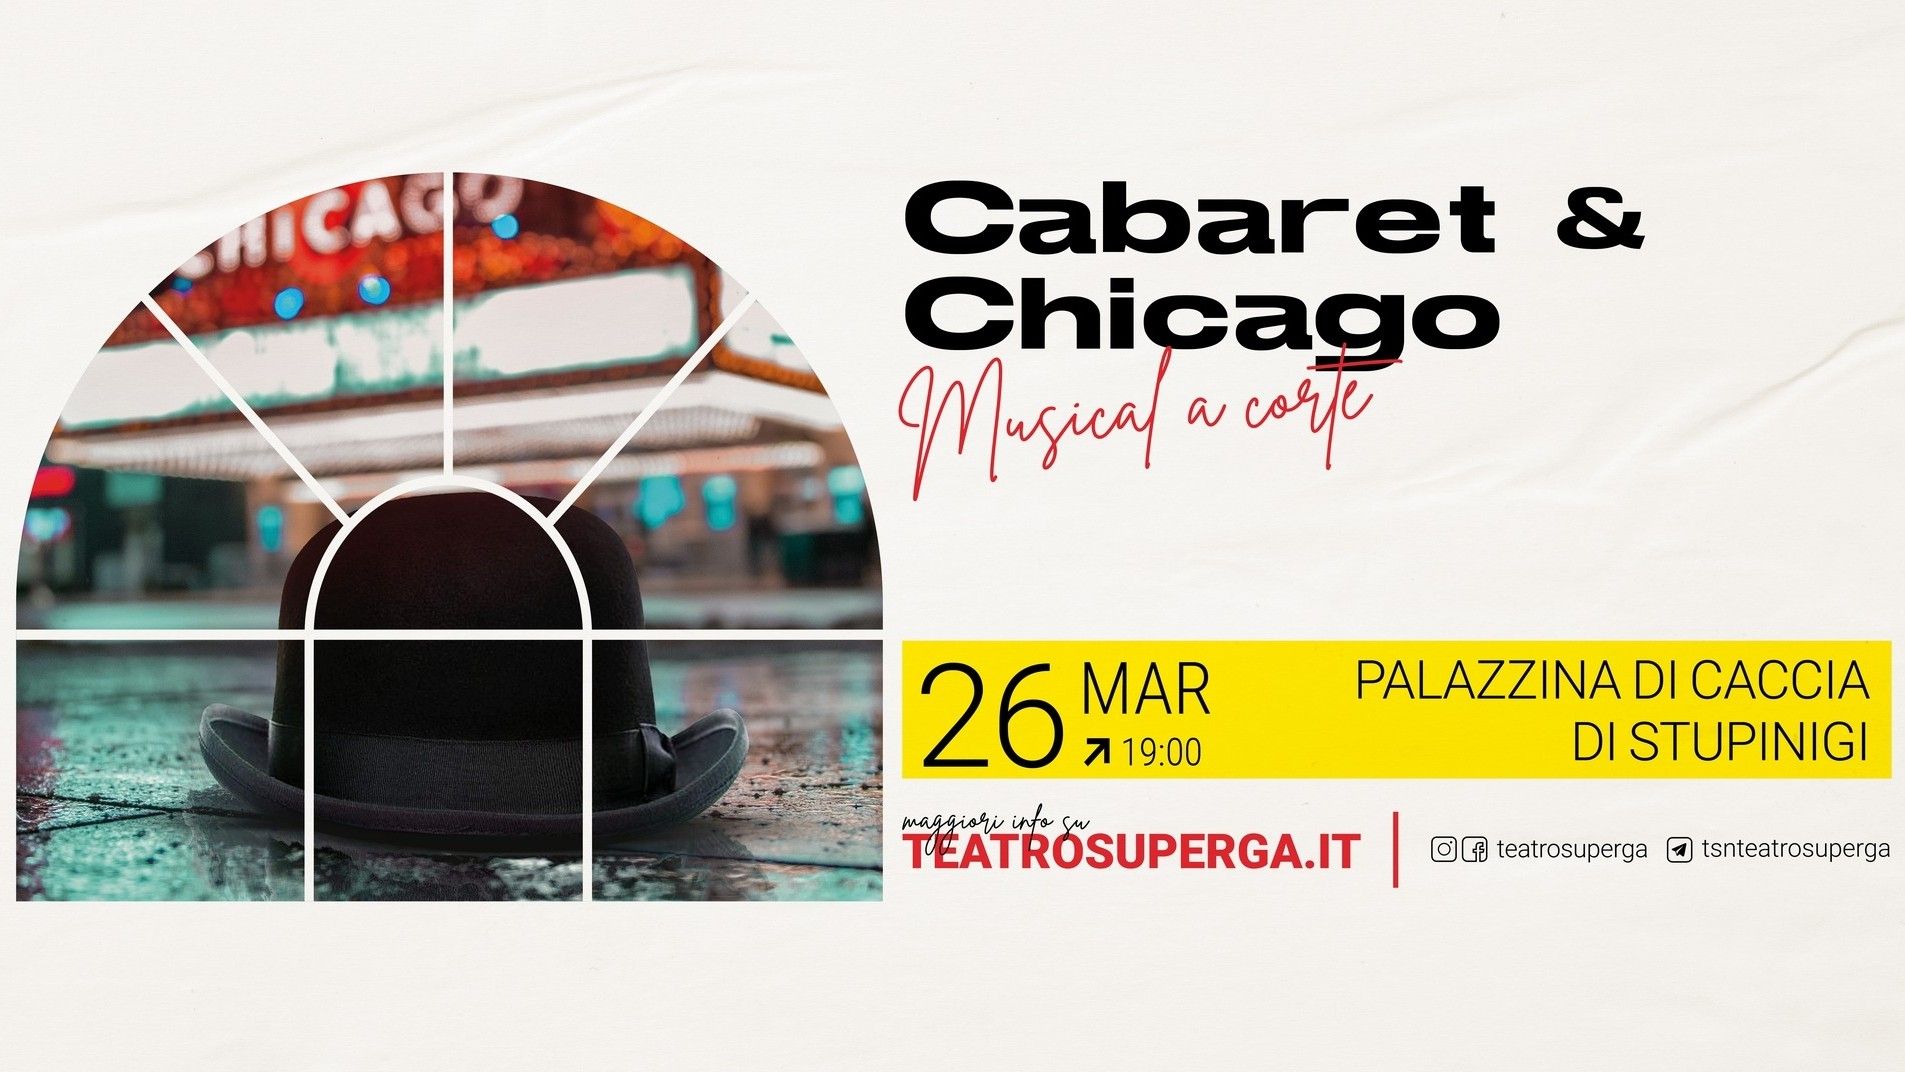 Cabaret & Chicago | Musical a Corte